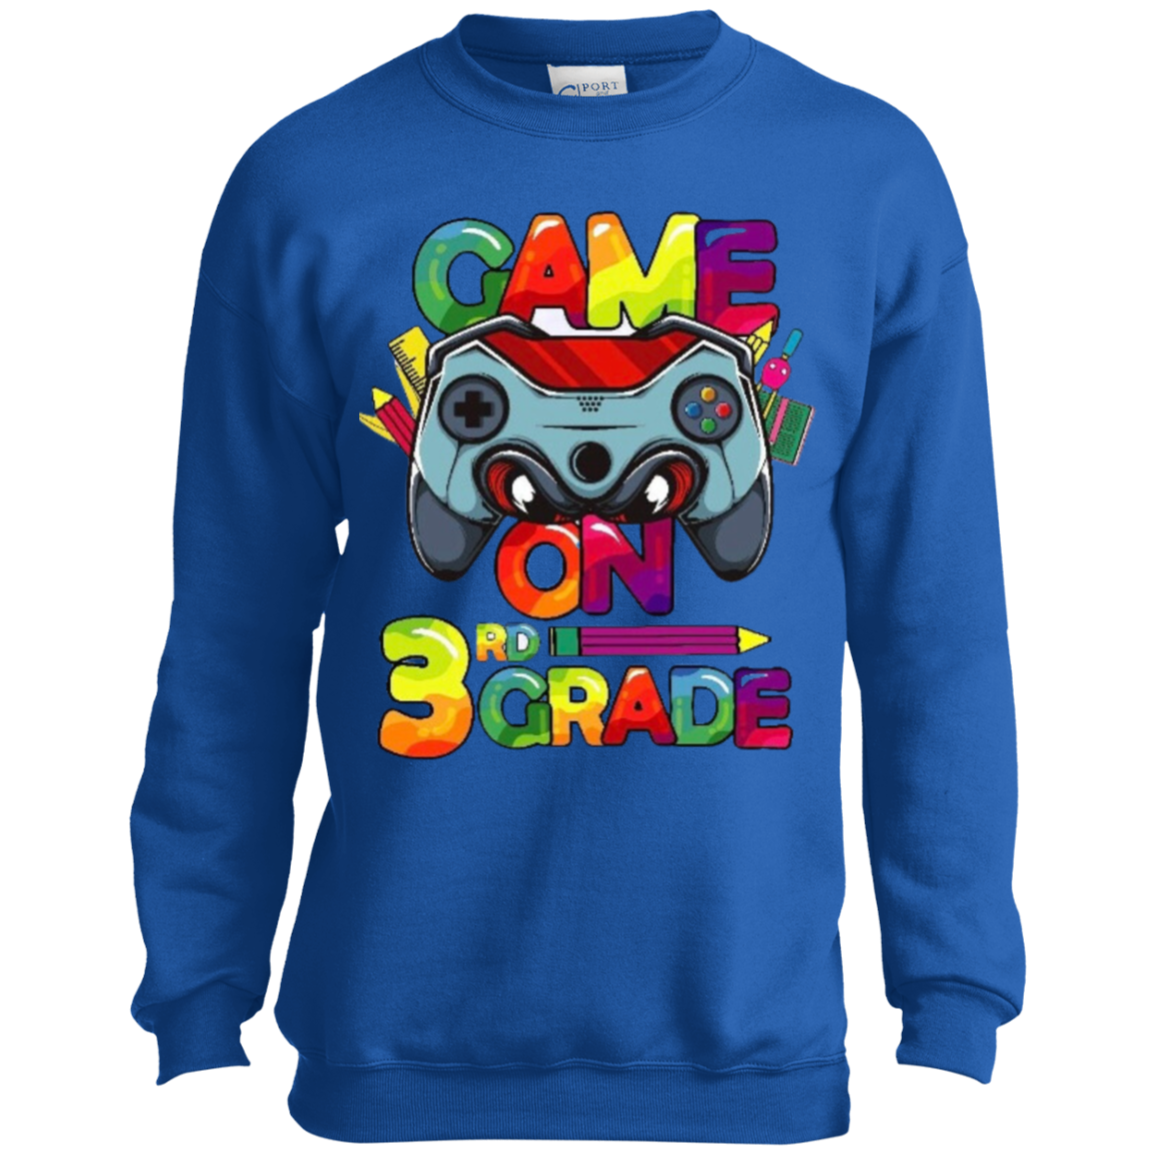 3RD Grade Sweatshirt